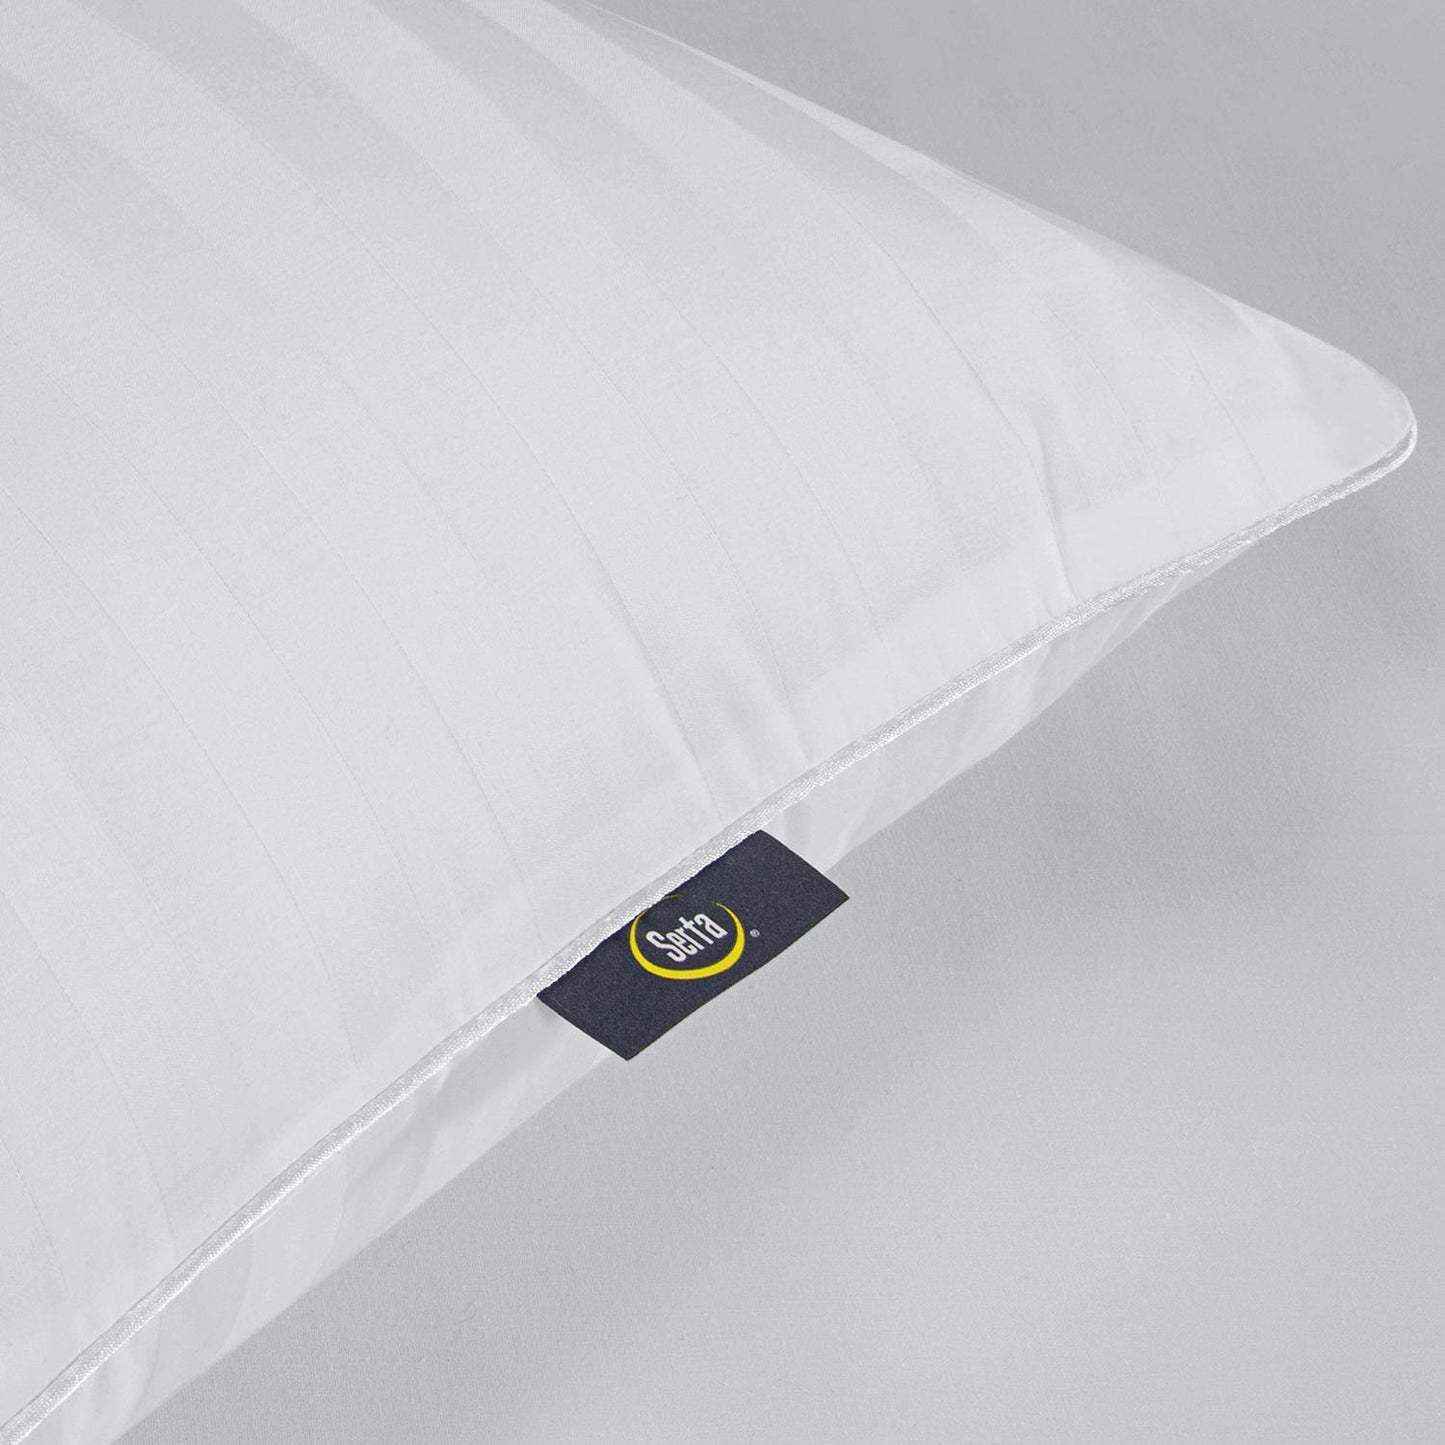 Serta Perfect Sleeper Comfy Sleep Bed Pillow, 2 Pack